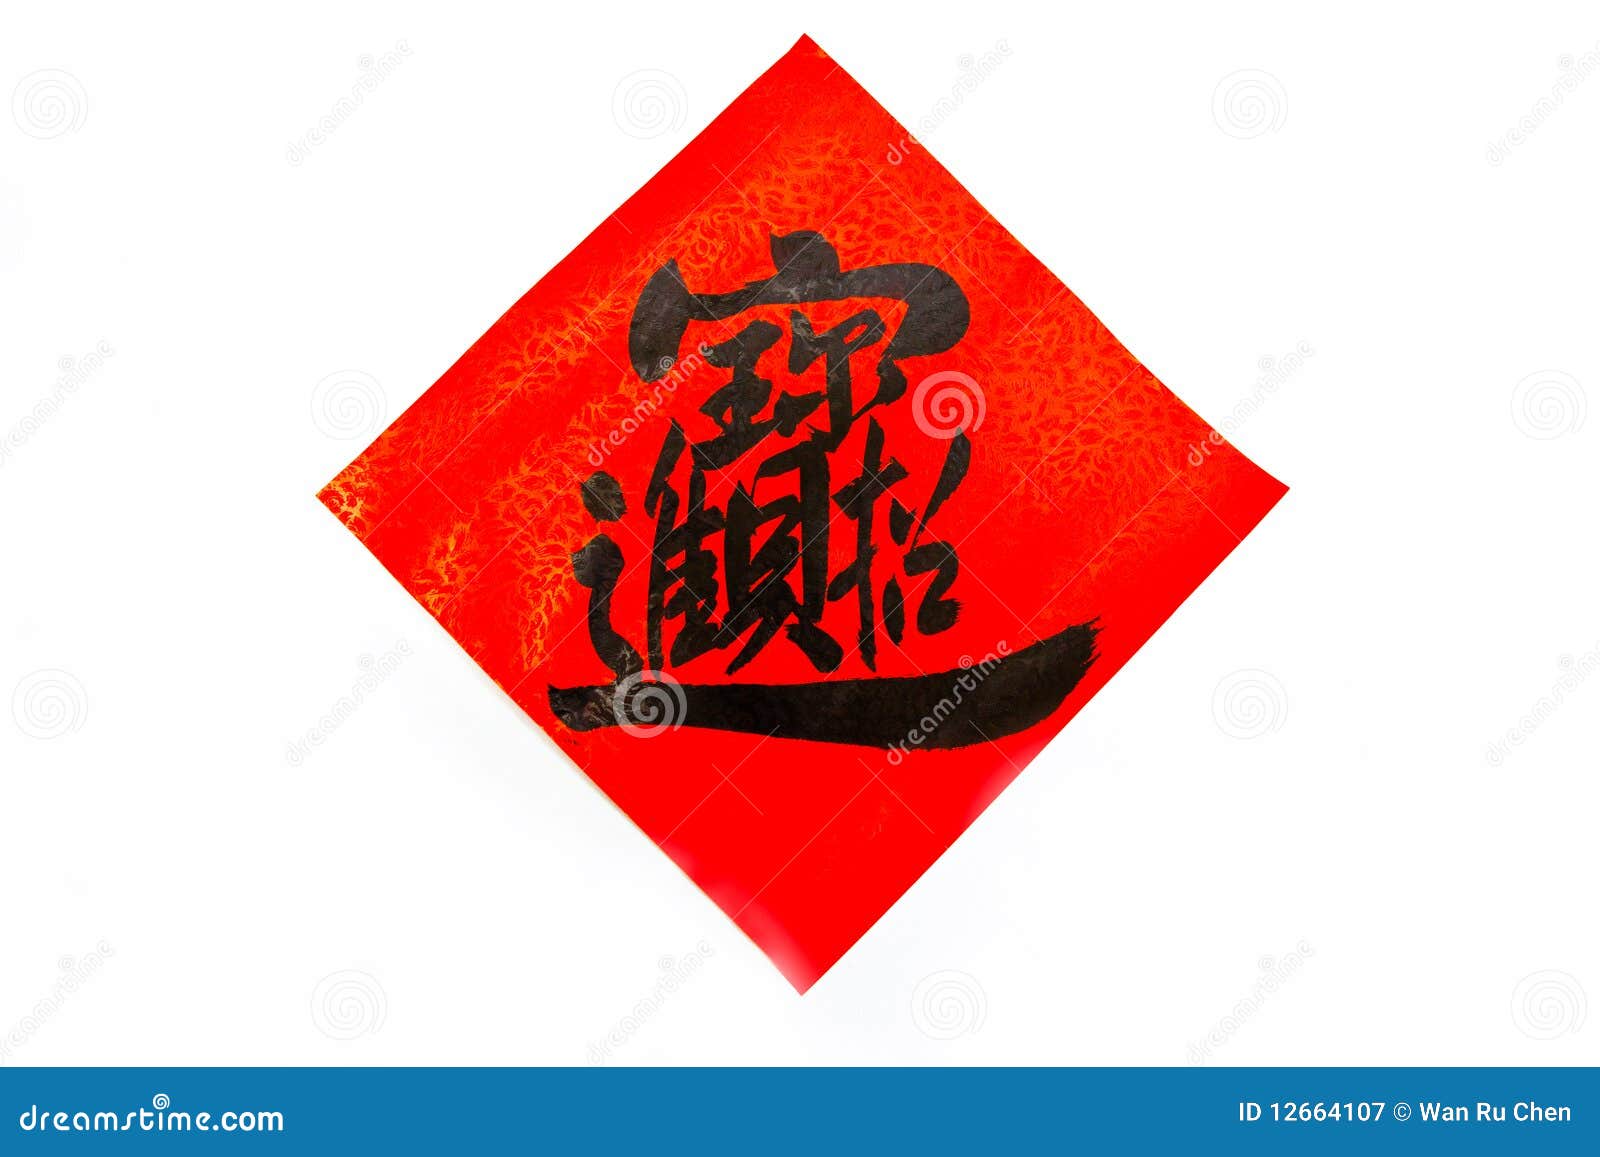 http://burnsnight2016.blogspot.in/2016/01/best-ways-to-celebrate-chinese-new-year.html